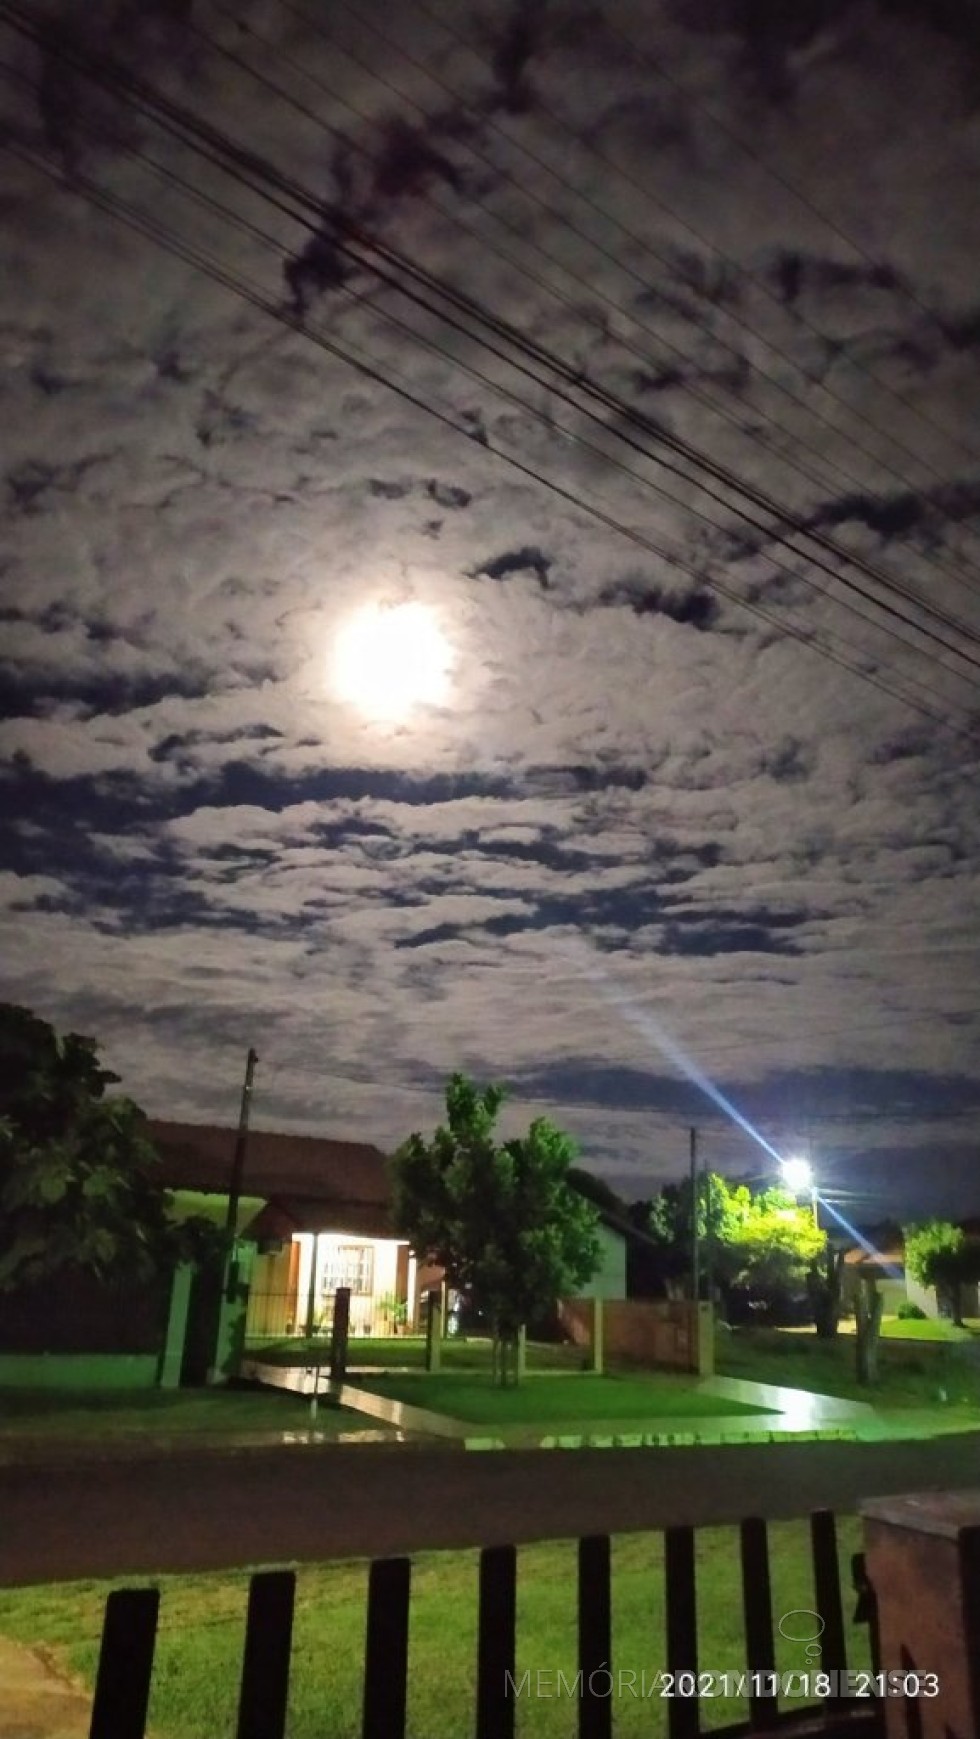  || Luar na cidade de Marechal Cândido Rondon (PR), às vésperas de Lua Cheia, às primeiras horas do anortecer de 18 de novembro de 2021.
Imagem: Acervo e crédito dea rondoennse Cleci (nascida Hardke) Dal Bello - FOTO 21 - 